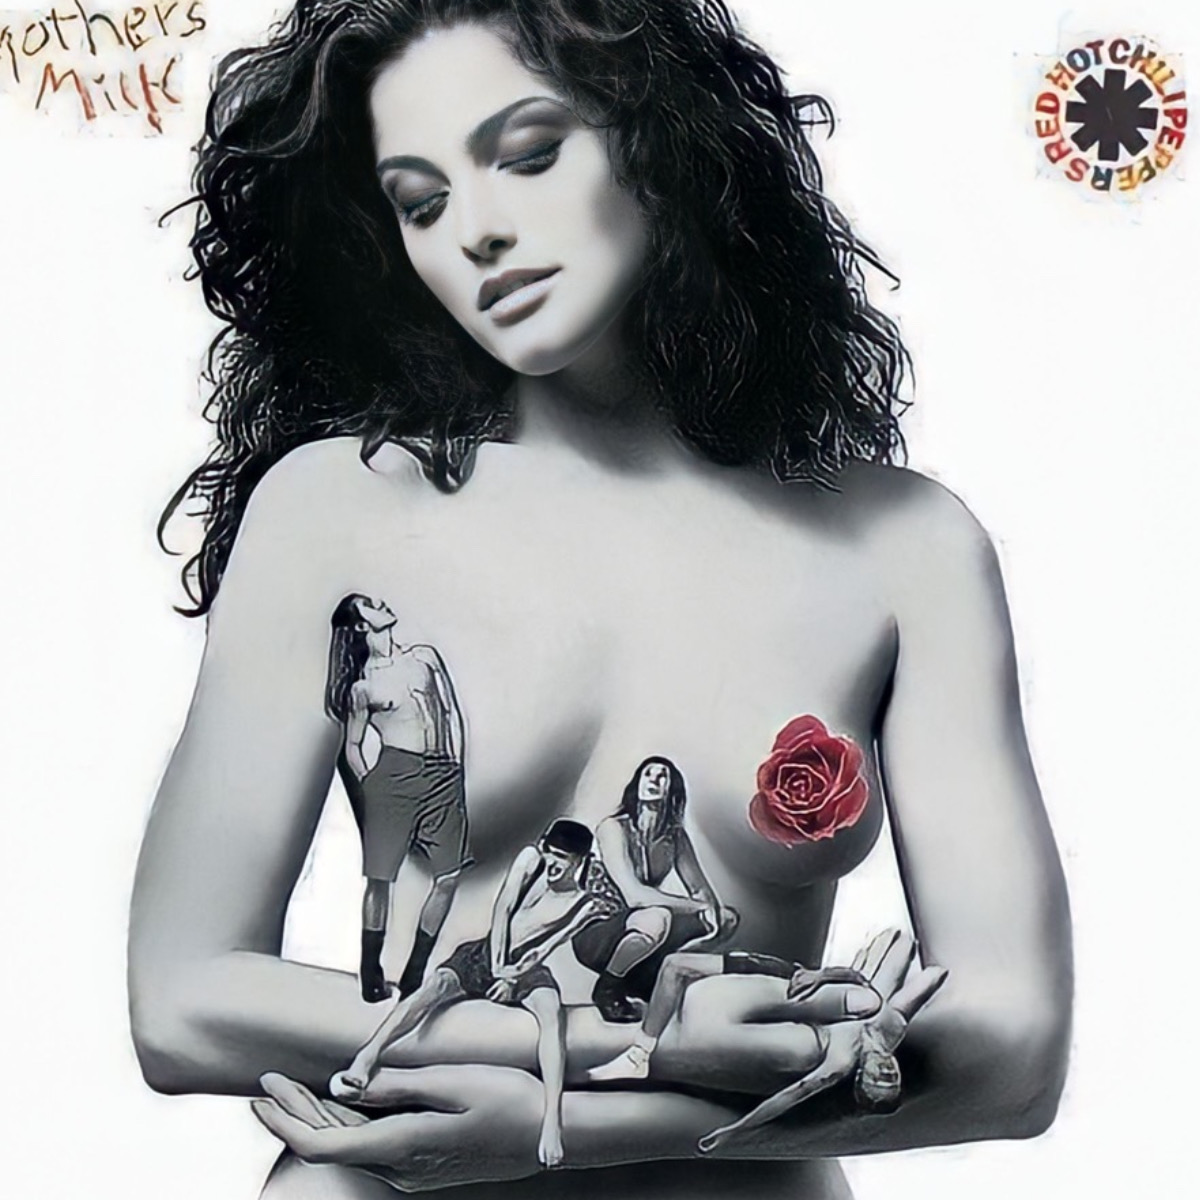 La pochette de l'album "Mother's Milk" des Red Hot Chili Peppers.